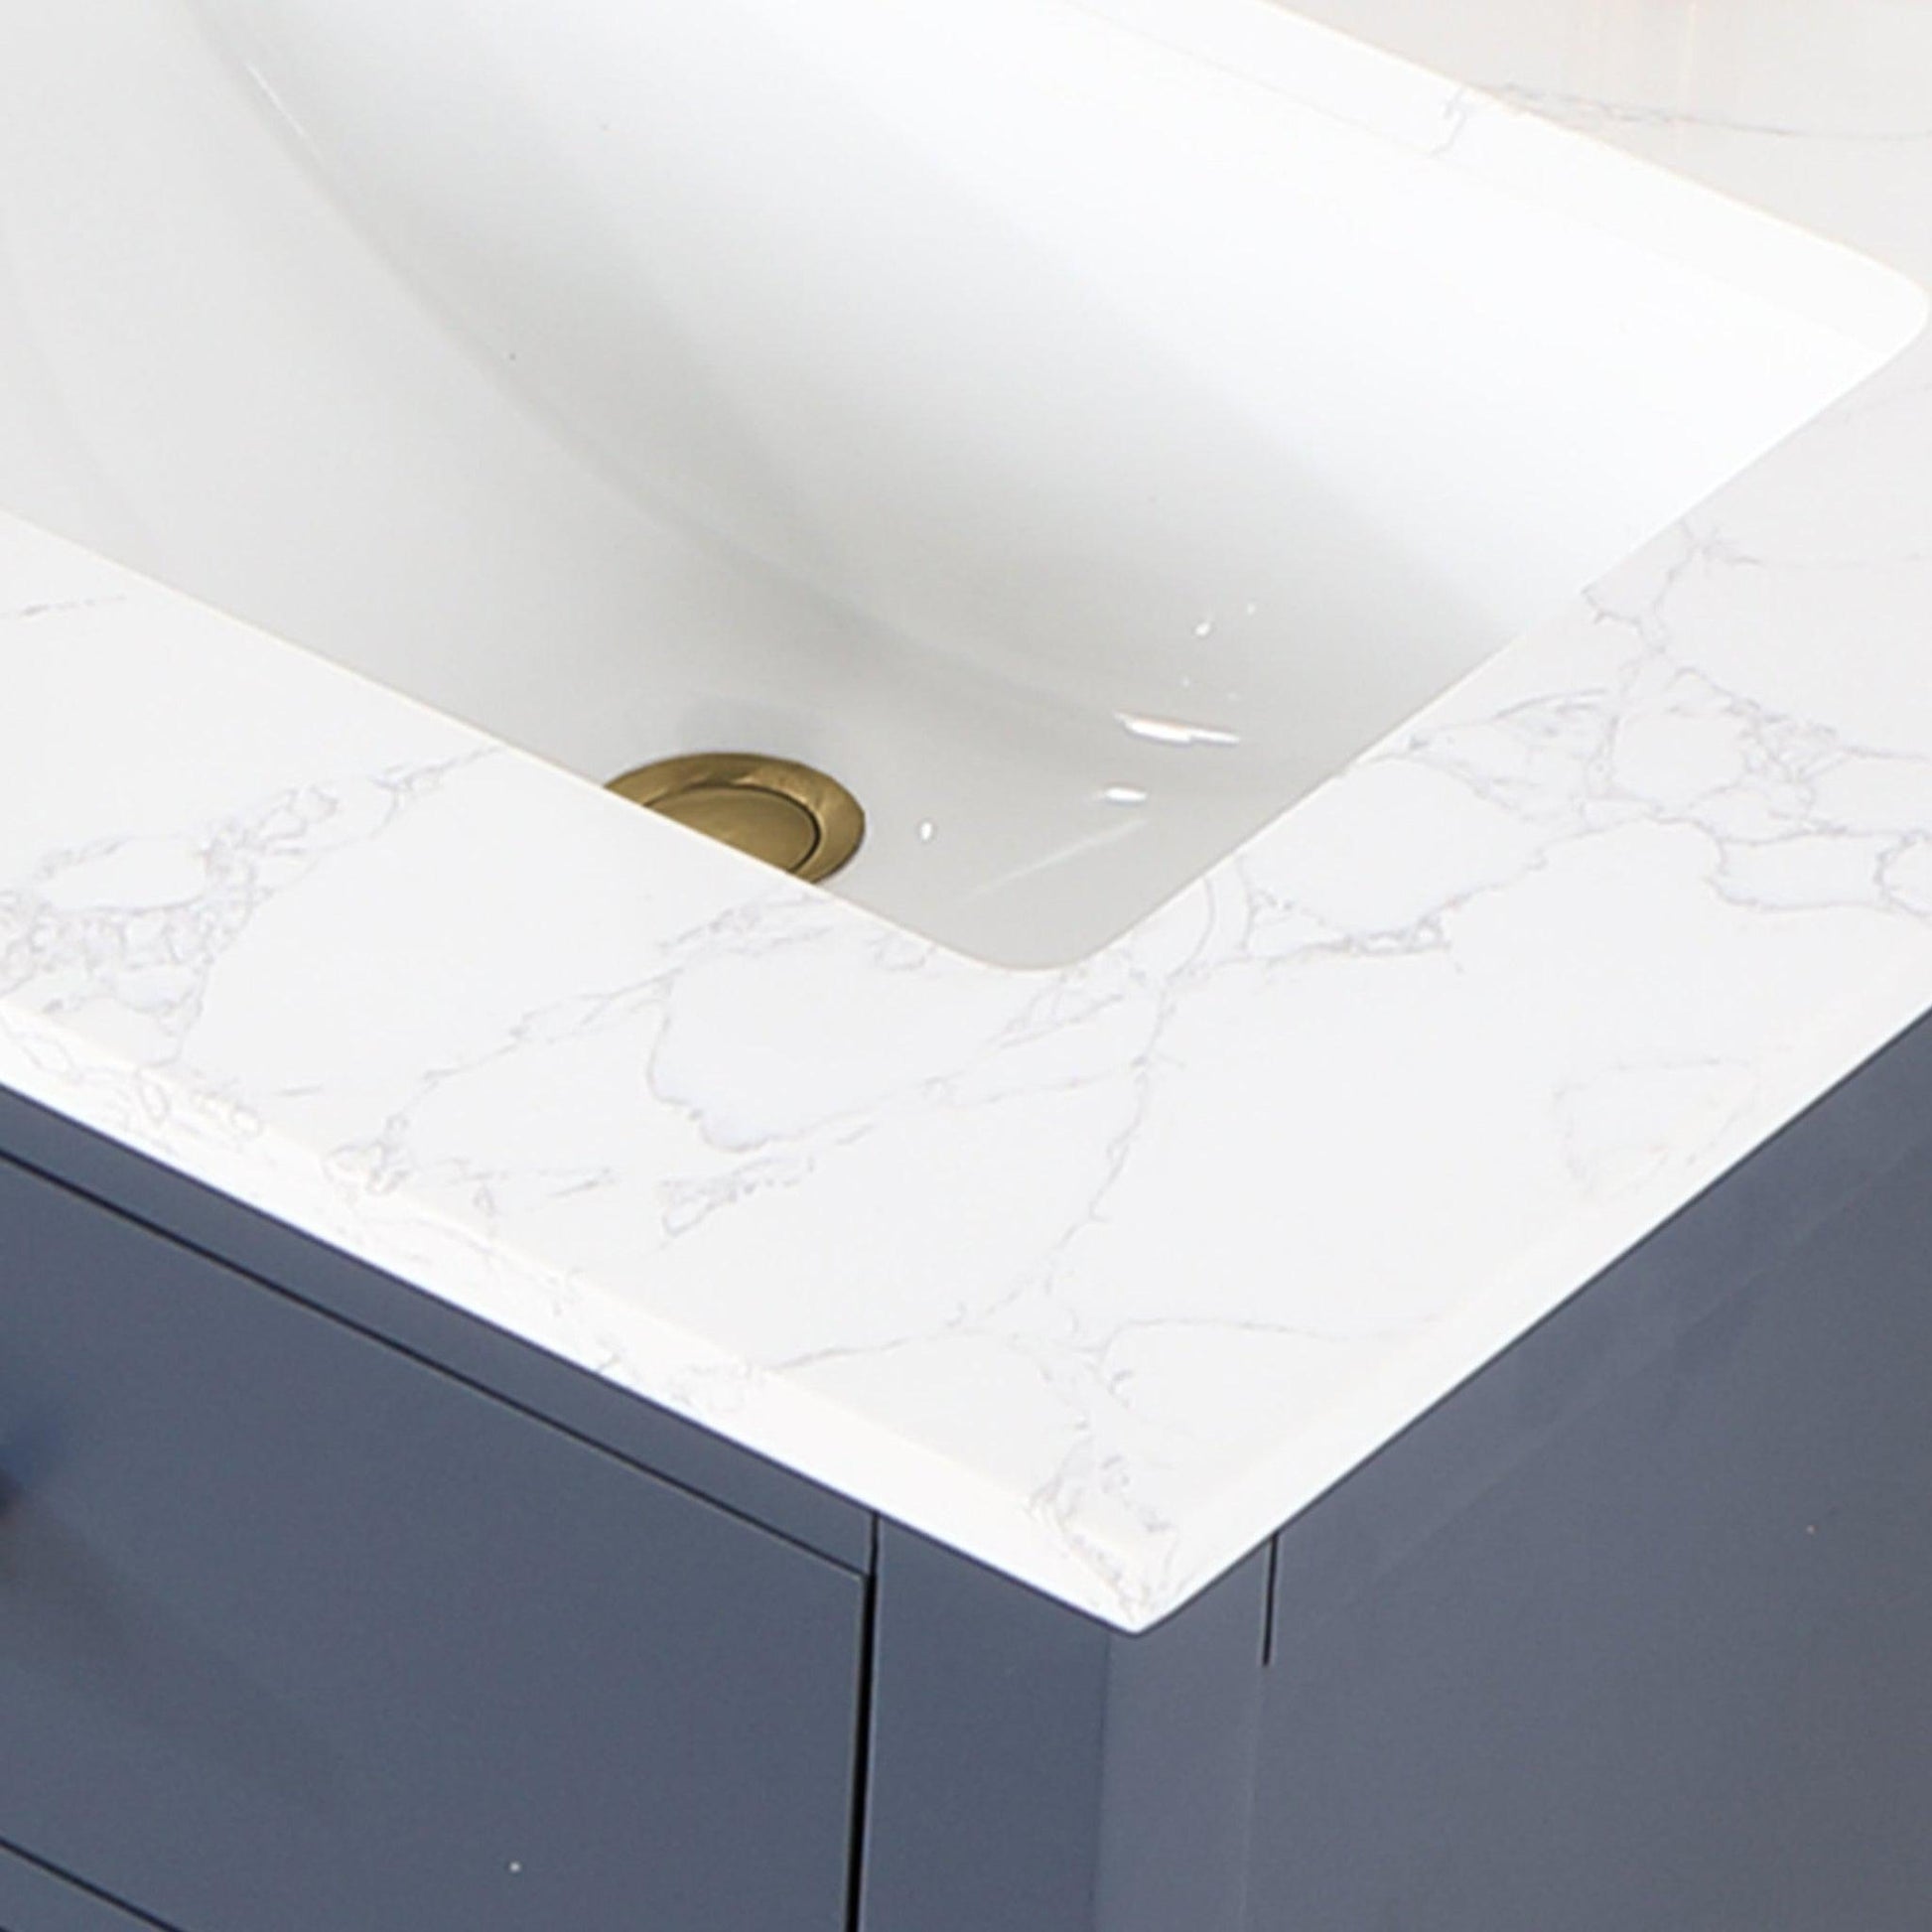 Altair Gavino 60" Royal Blue Freestanding Double Bathroom Vanity Set With Mirror, Grain White Composite Stone Top, Single Rectangular Undermount Ceramic Sink, Overflow, Sidesplash, and Backsplash